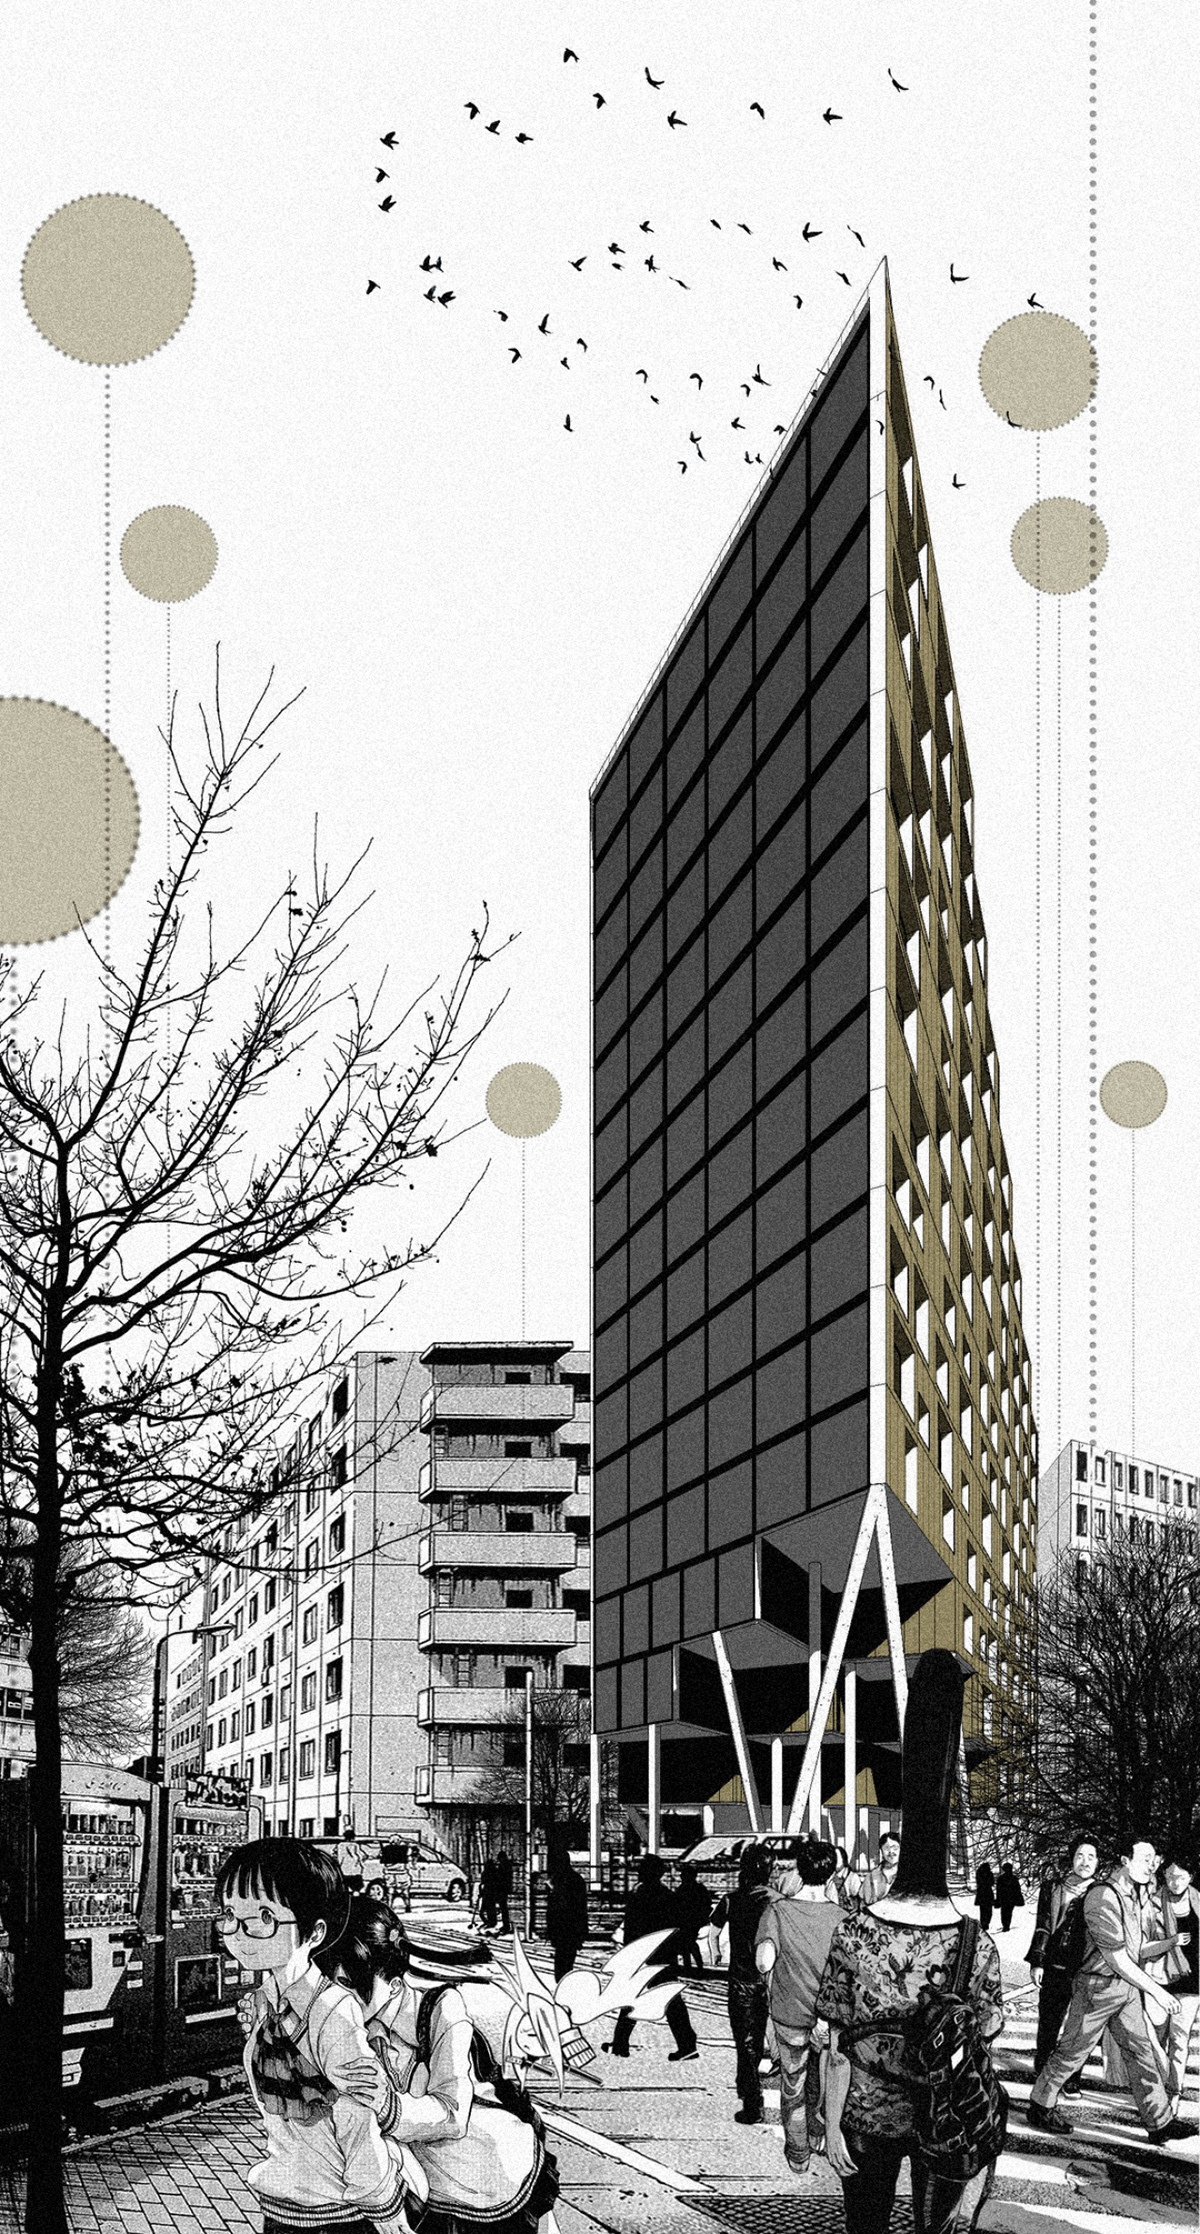 architecture design Project draw manga Comix student building city